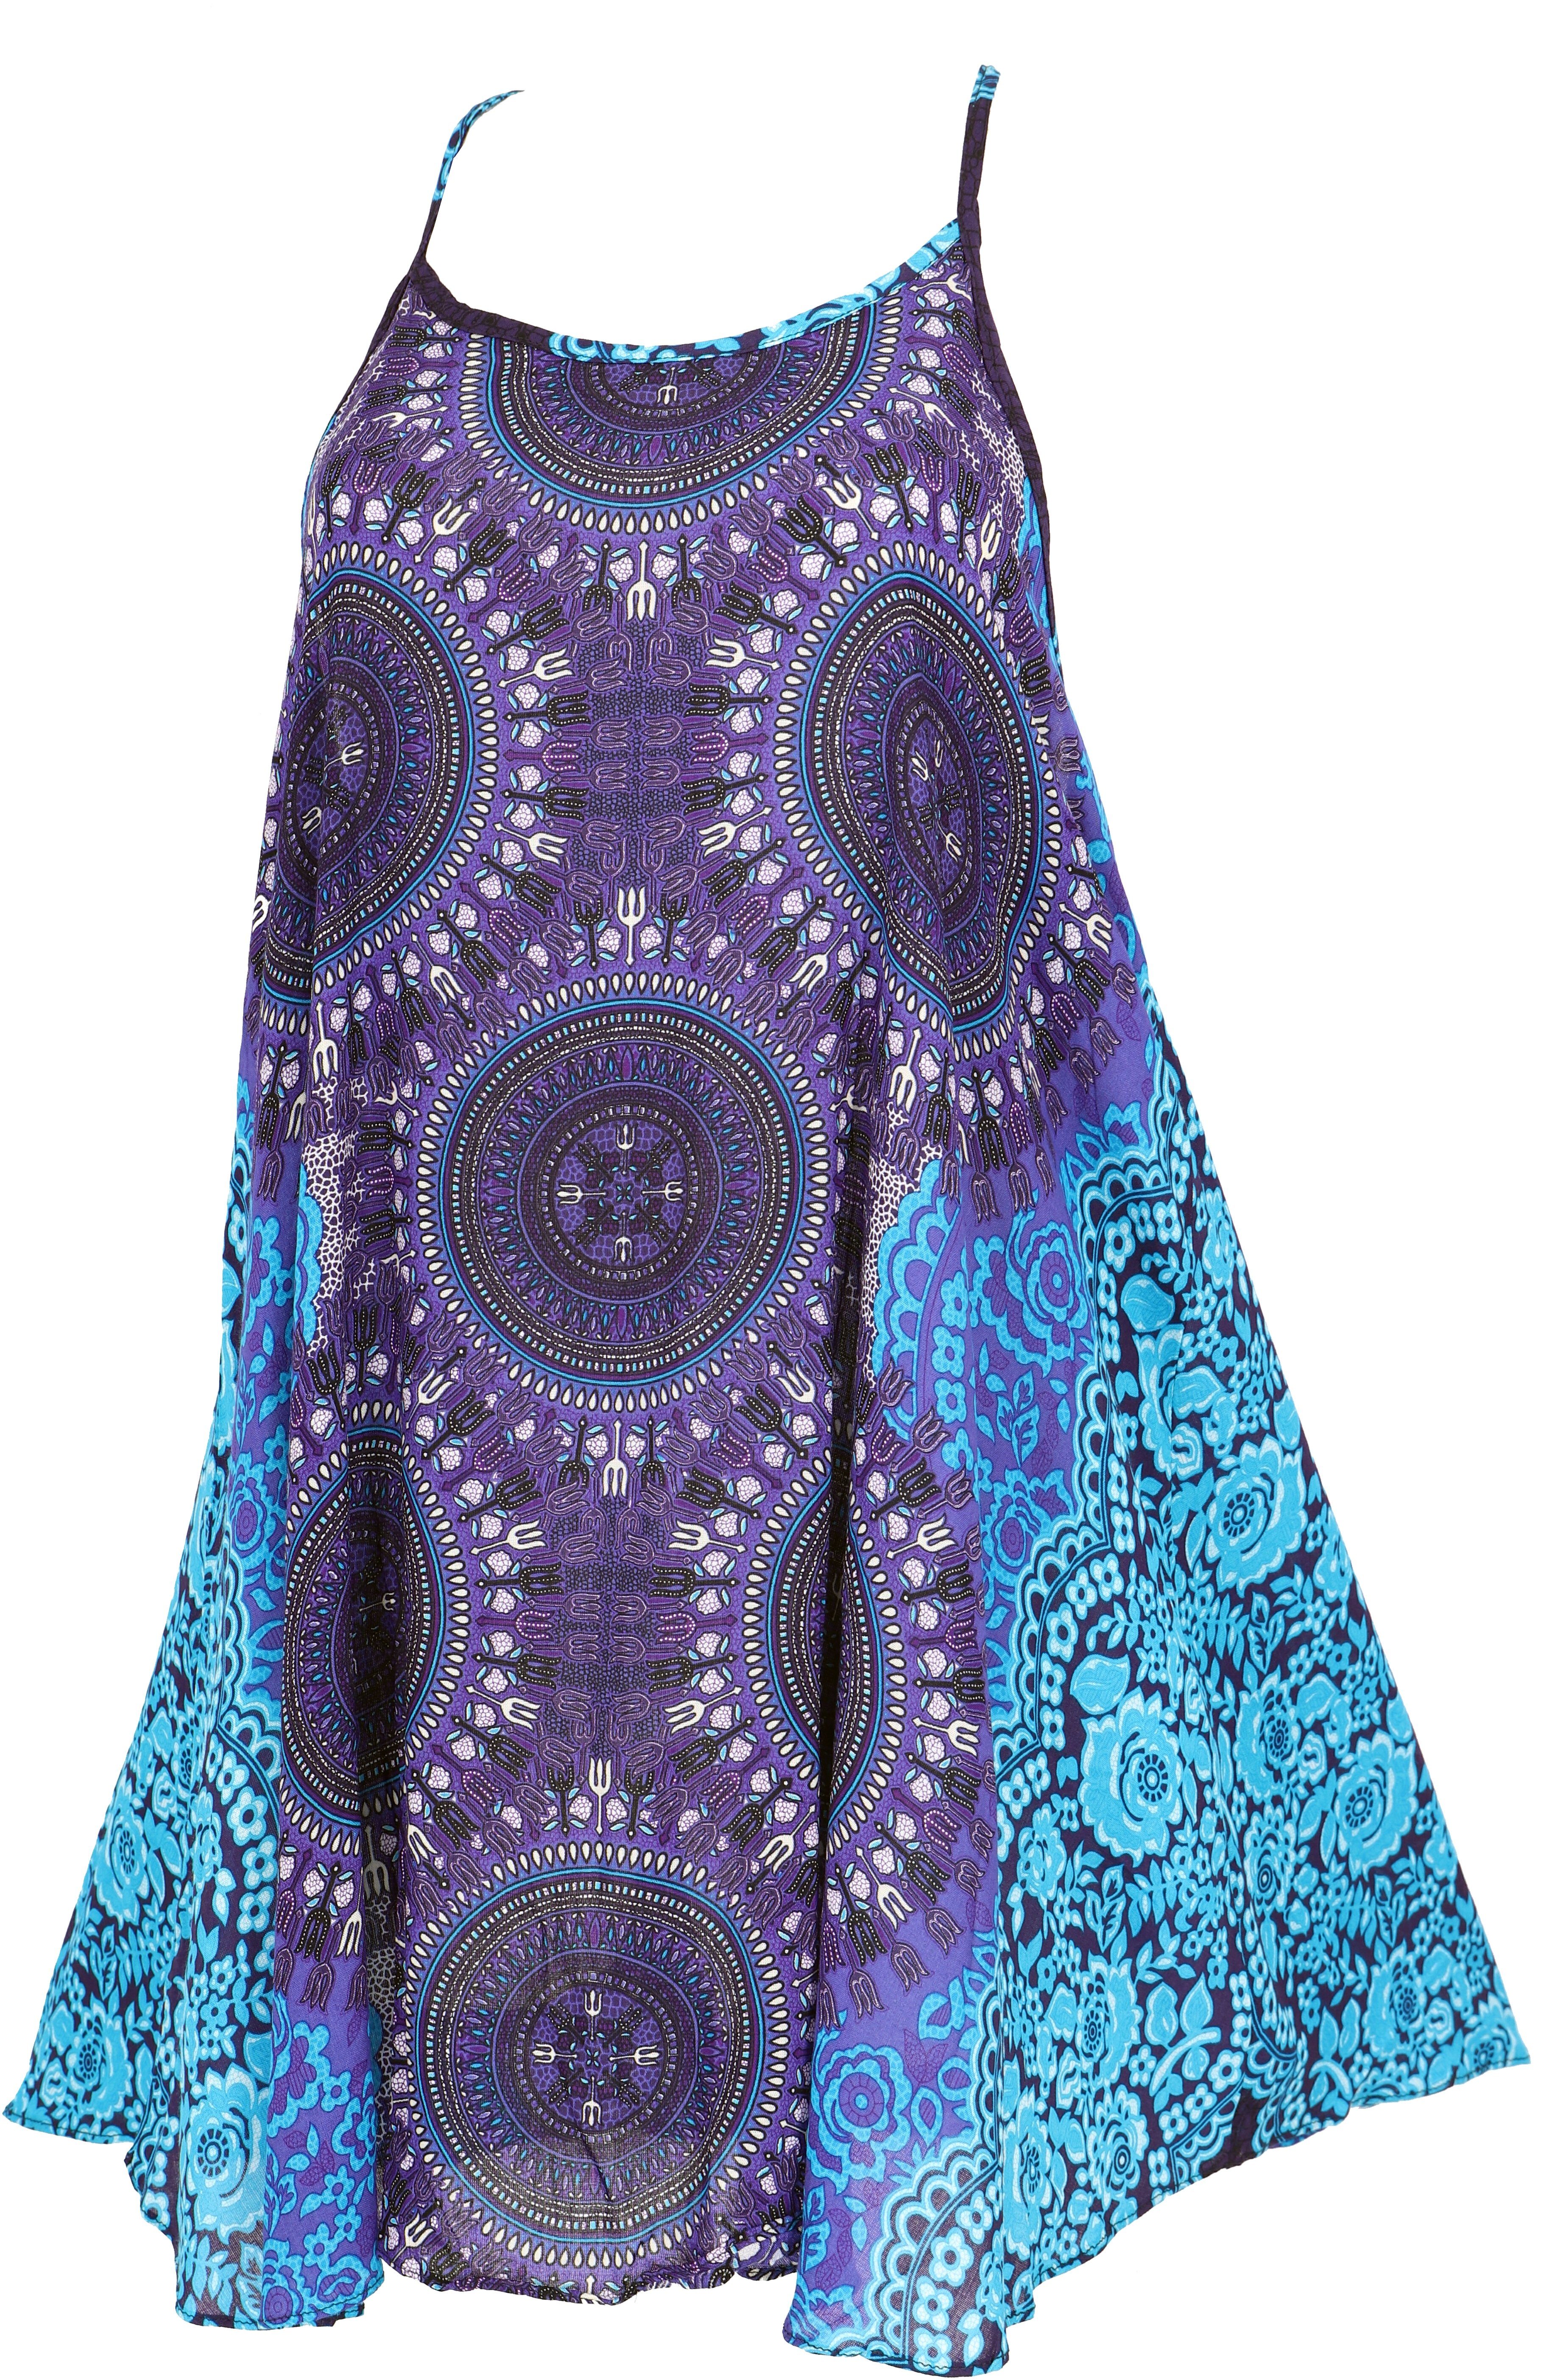 Bekleidung flieder/blau Boho Minikleid, Guru-Shop Mandala Midikleid alternative Trägerkleid,..